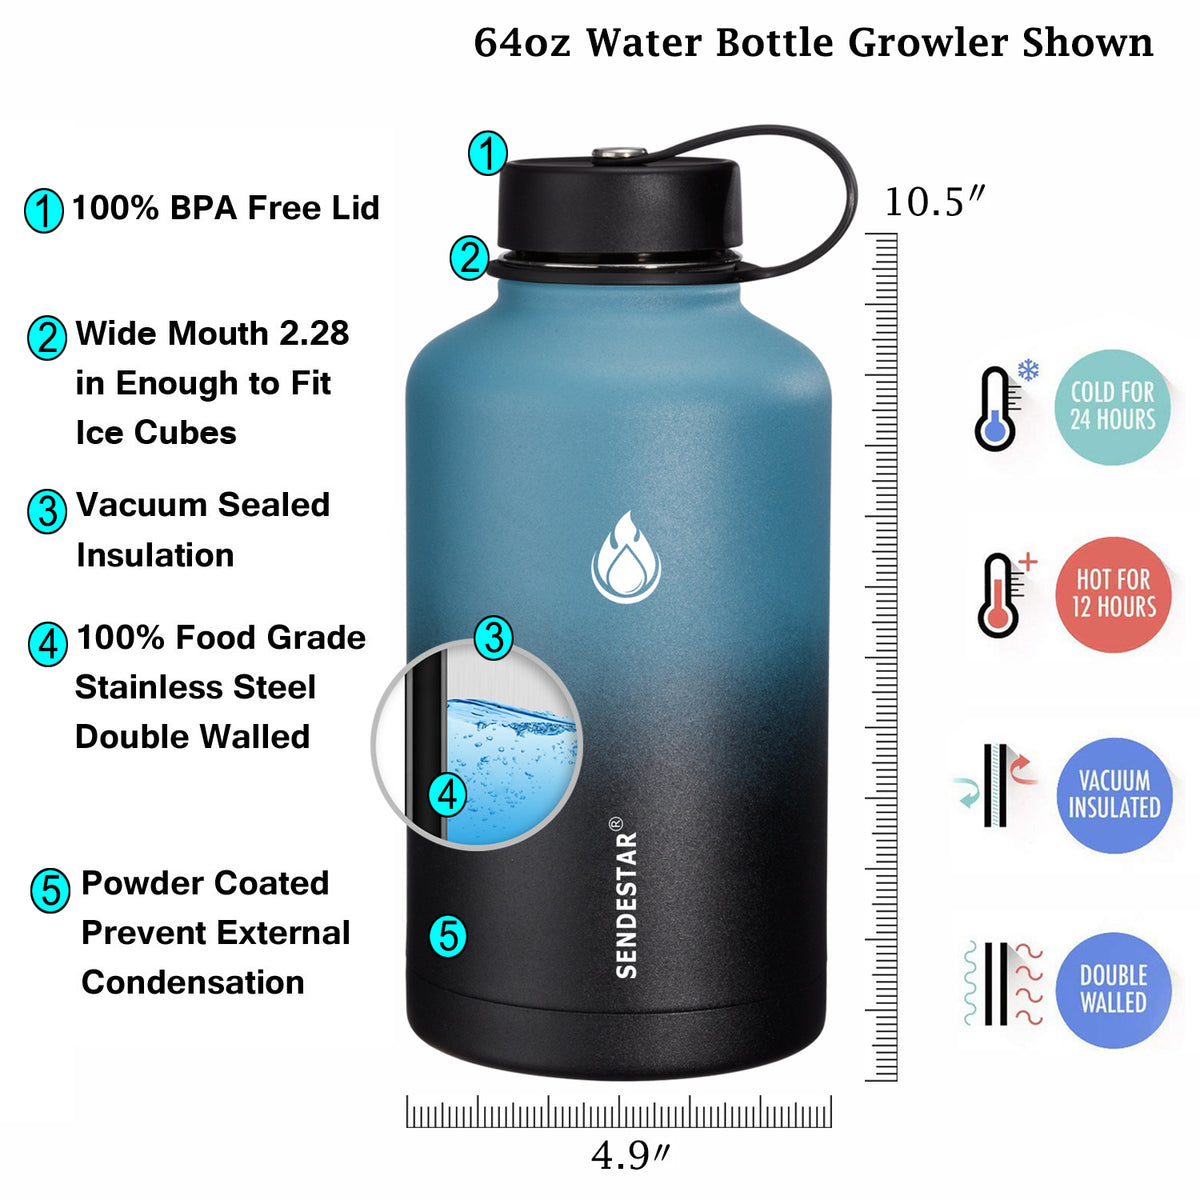 HydroFest Insulated Water Bottle, 64oz Water Bottle with Straw lid, Sp –  sendestar